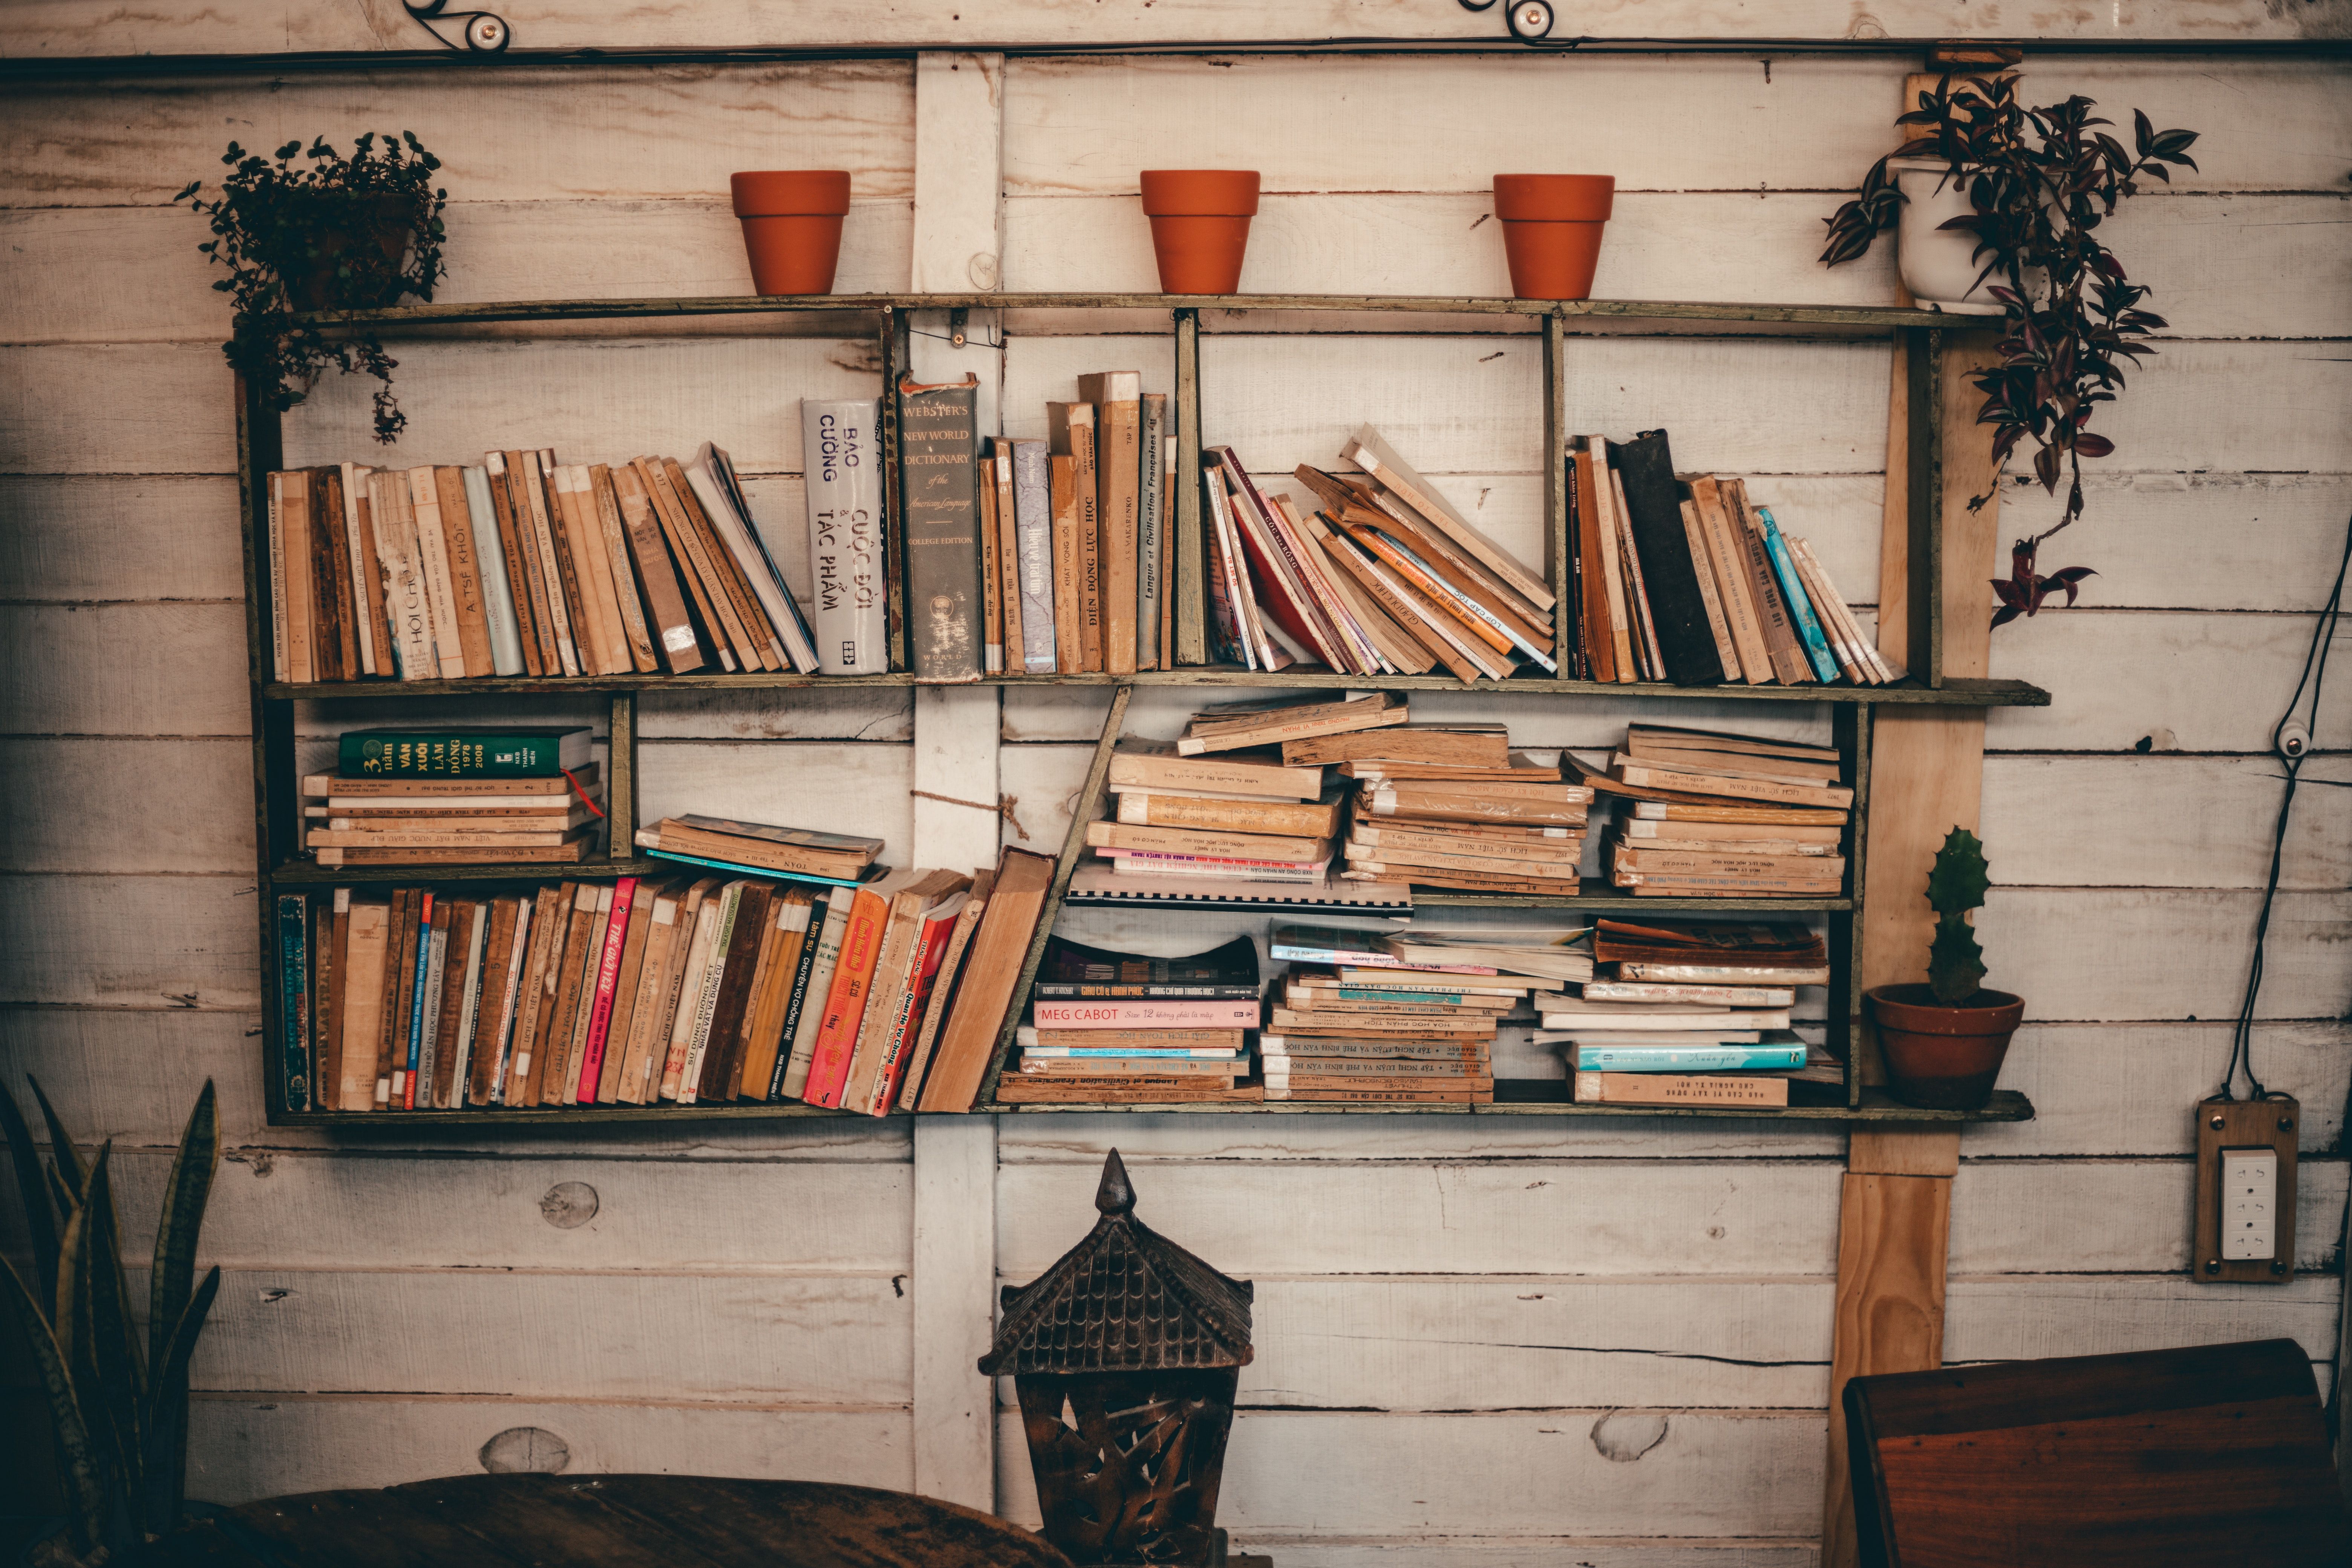 A book shelf with books and pots of plants - Bookshelf